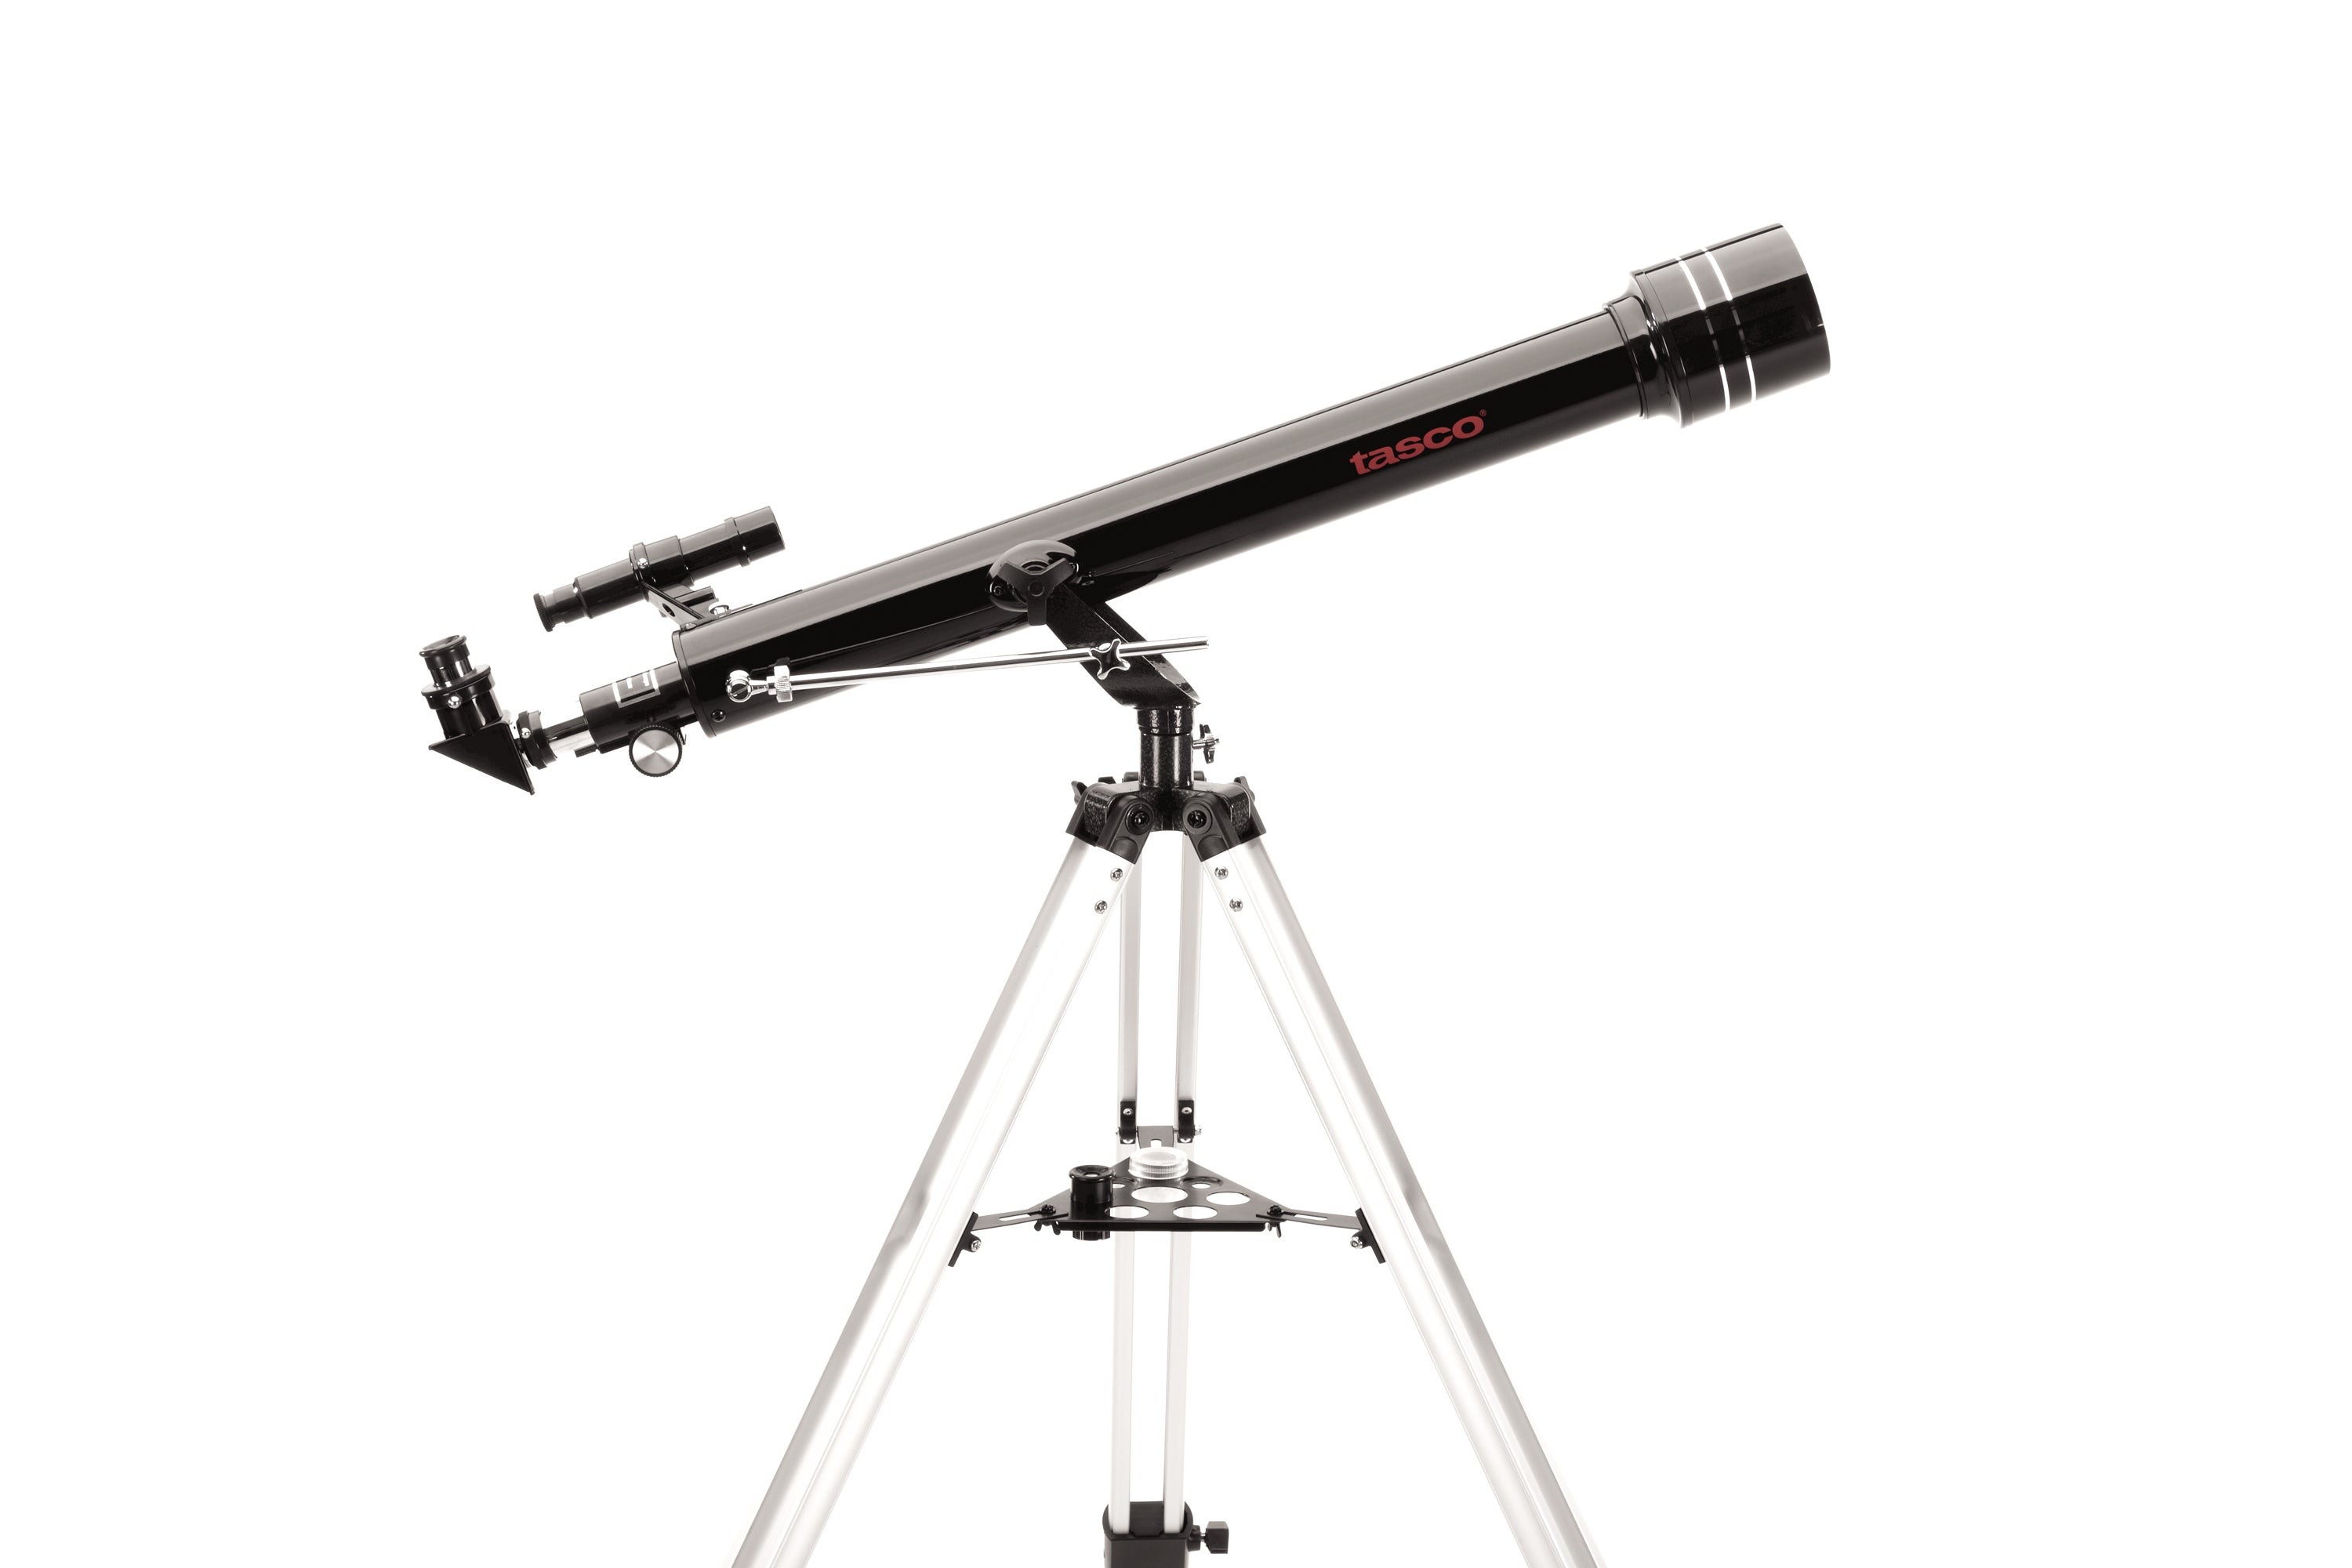 800x 60mm Novice Refractor Telescope